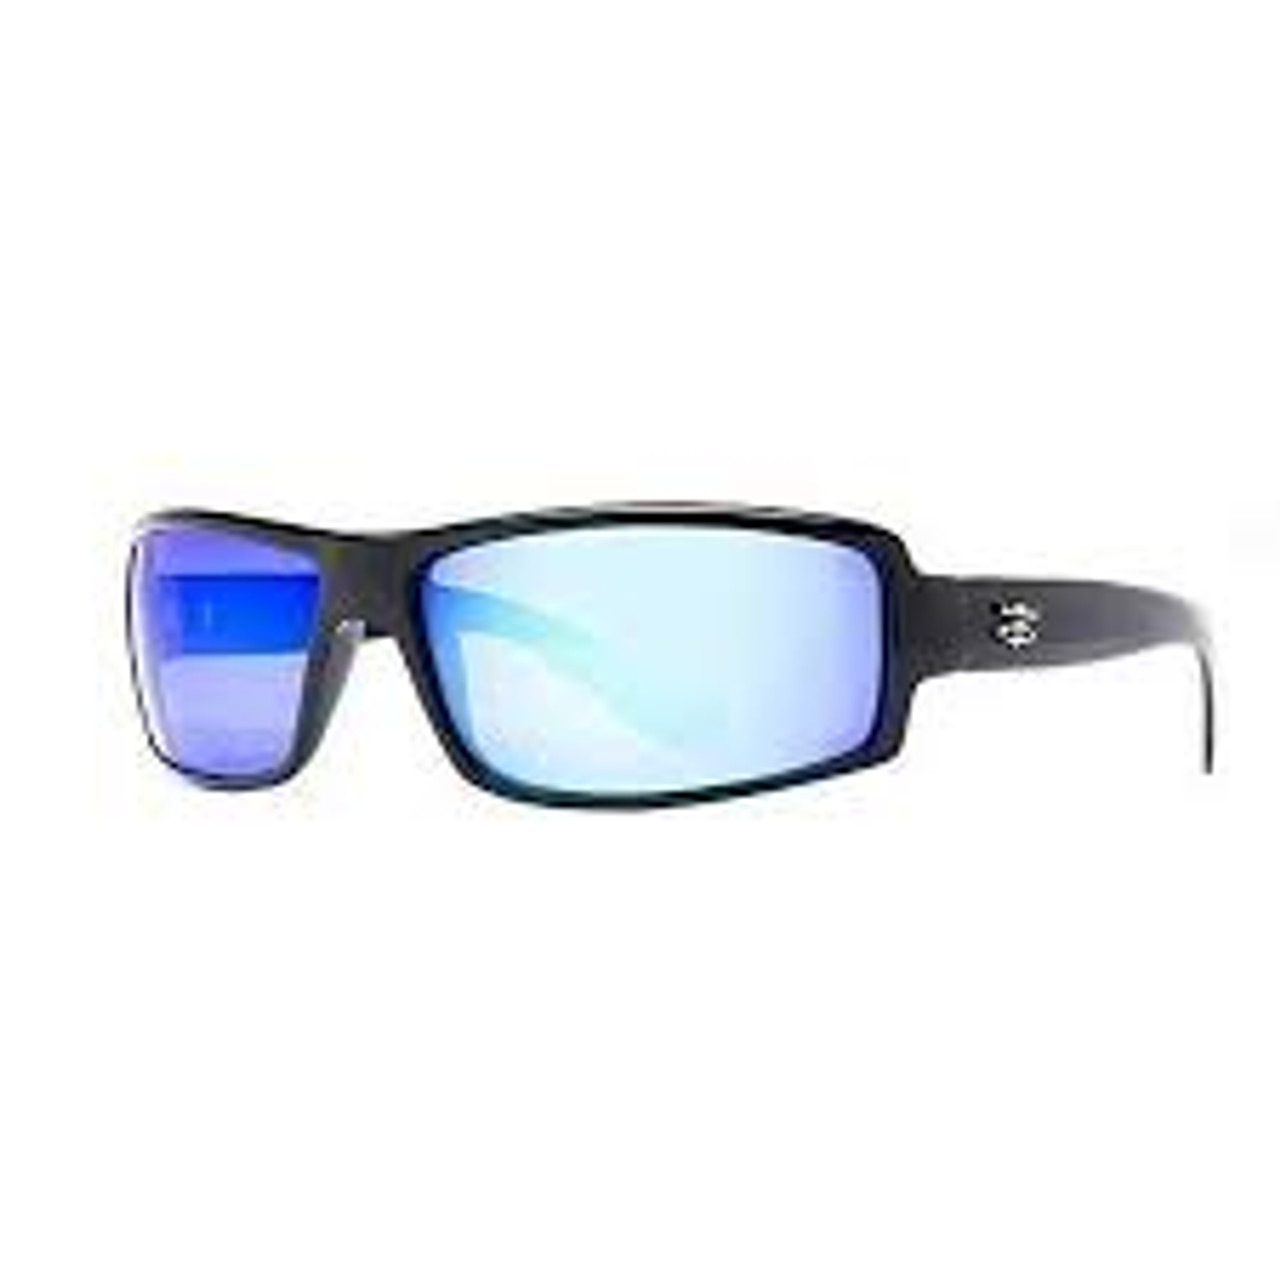 Calcutta New Wave Sunglasses Shiny Black Frame/Blue Mirror Lens 63mm Lens